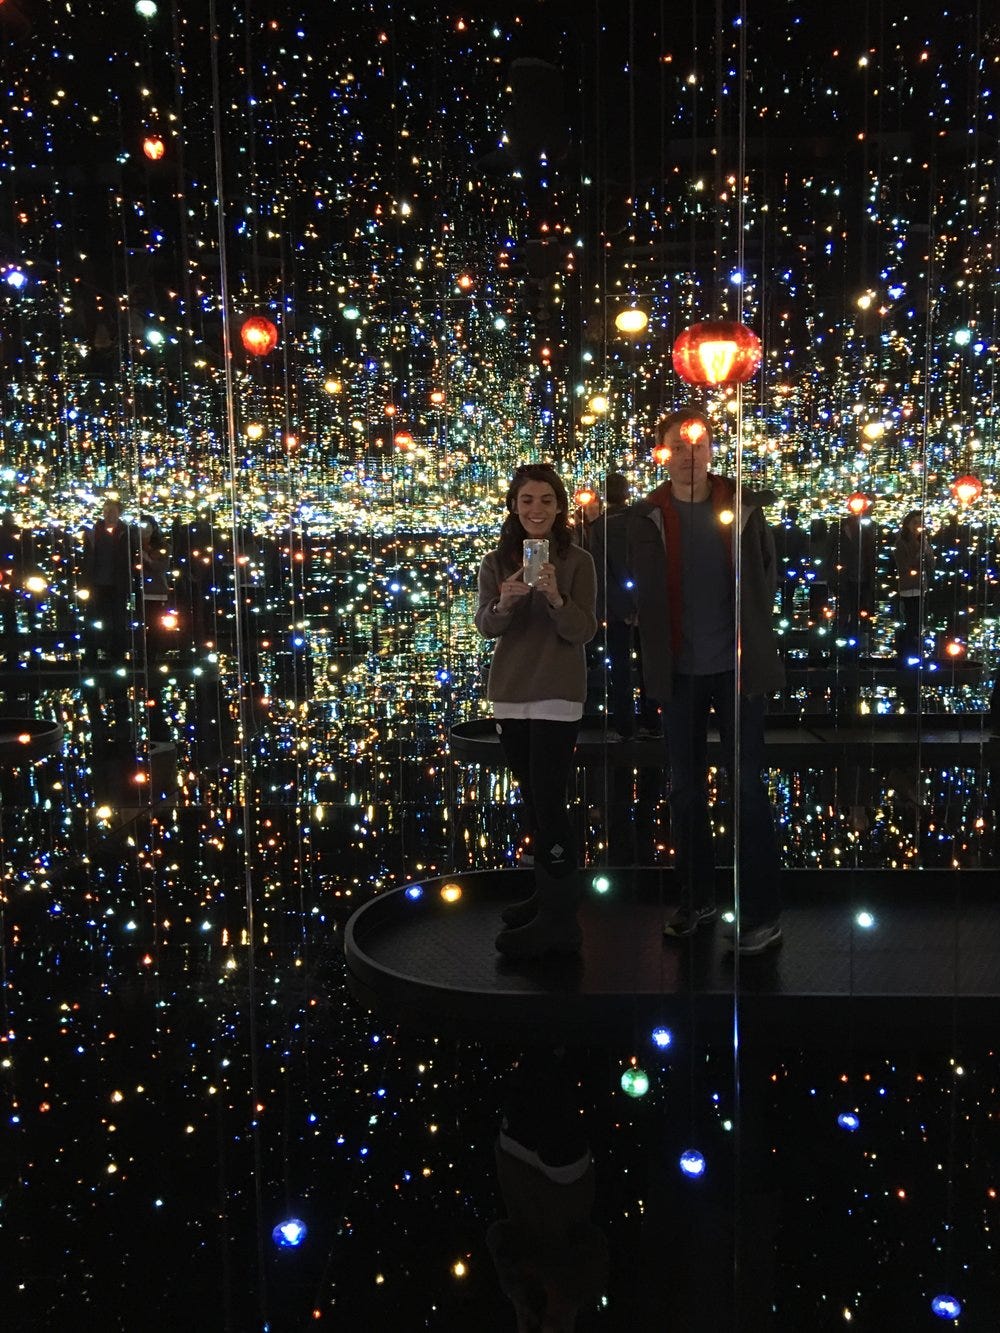 Yayoi Kusama, Infinity Mirrored Room – The Souls of Millions of Light Years Away, 2013